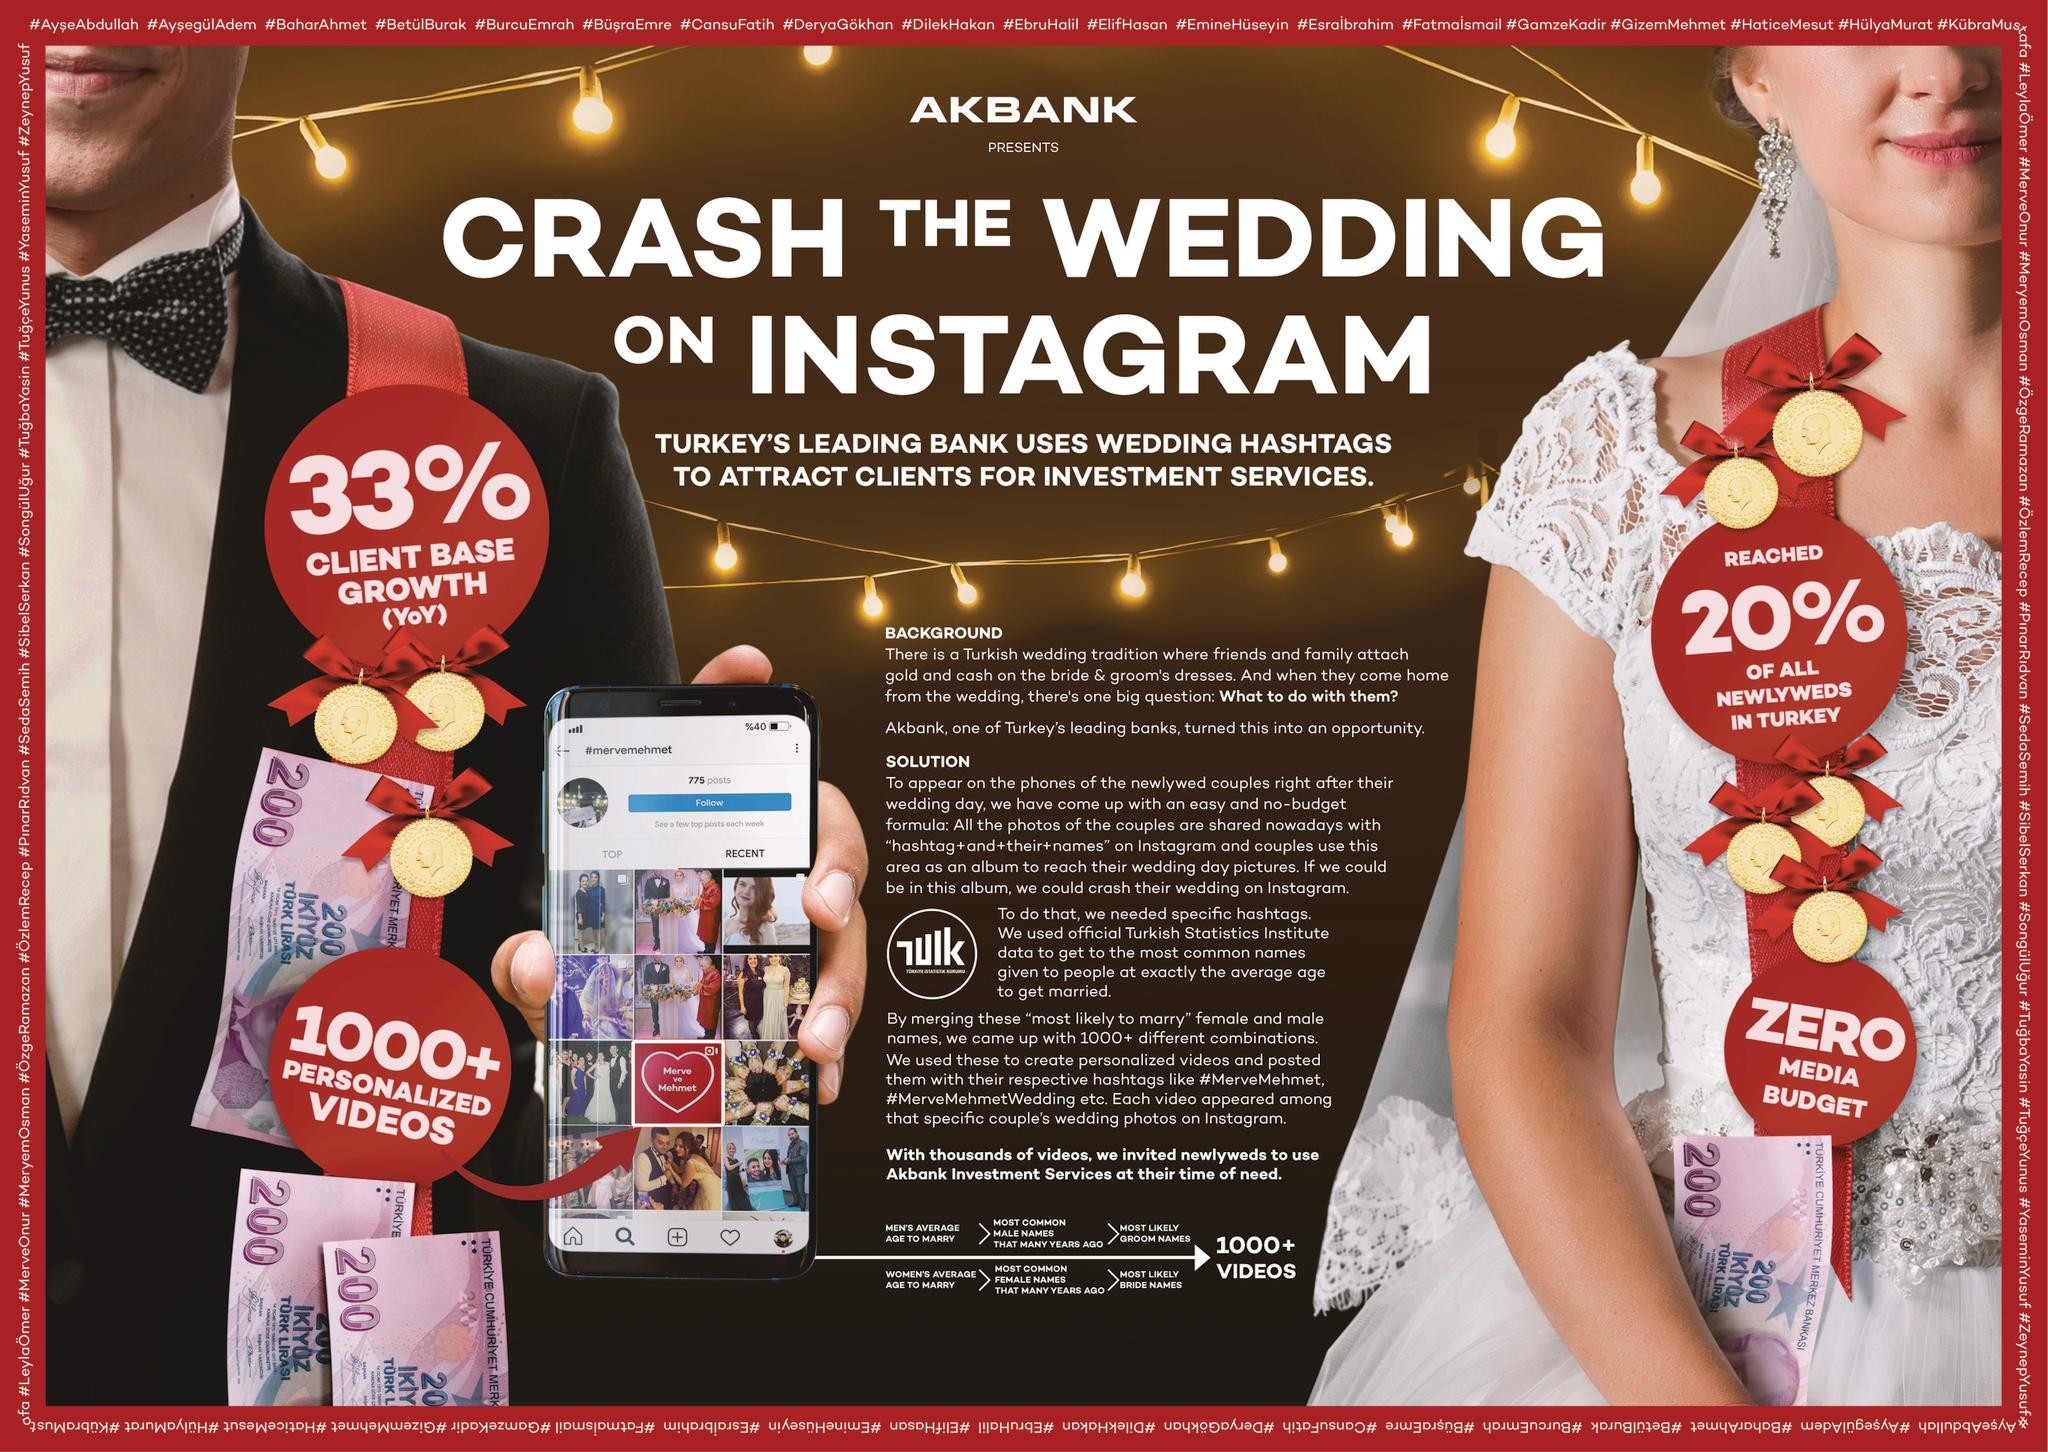 Crash The Wedding on Instagram